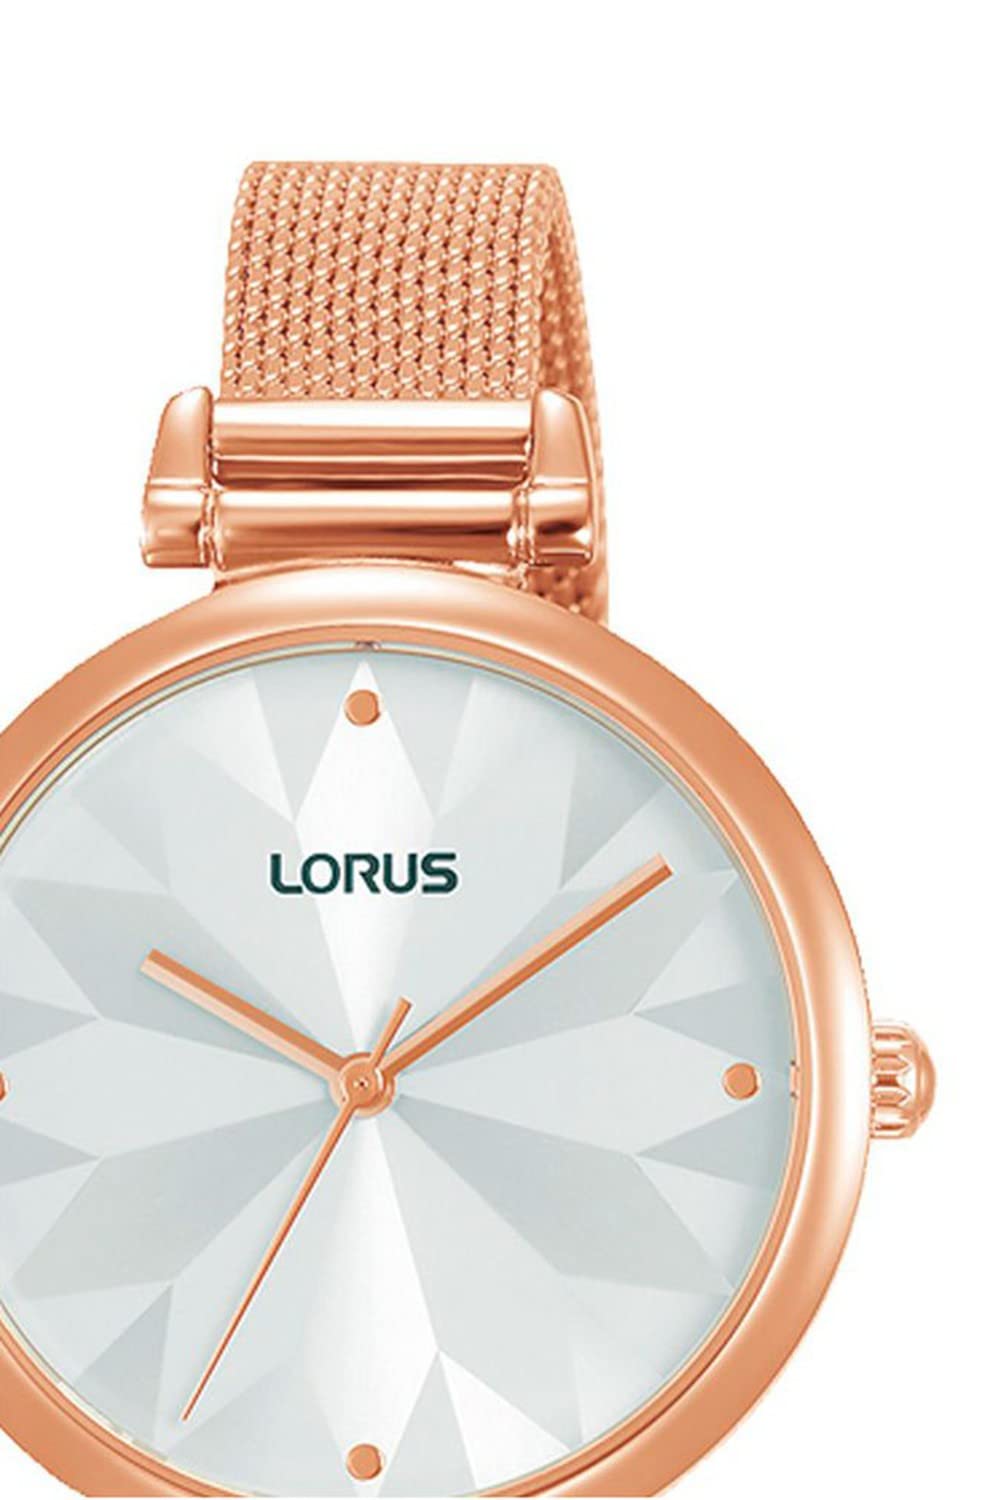 Lorus Woman Womens Analog Quartz Watch with Stainless Steel Bracelet RG204TX5